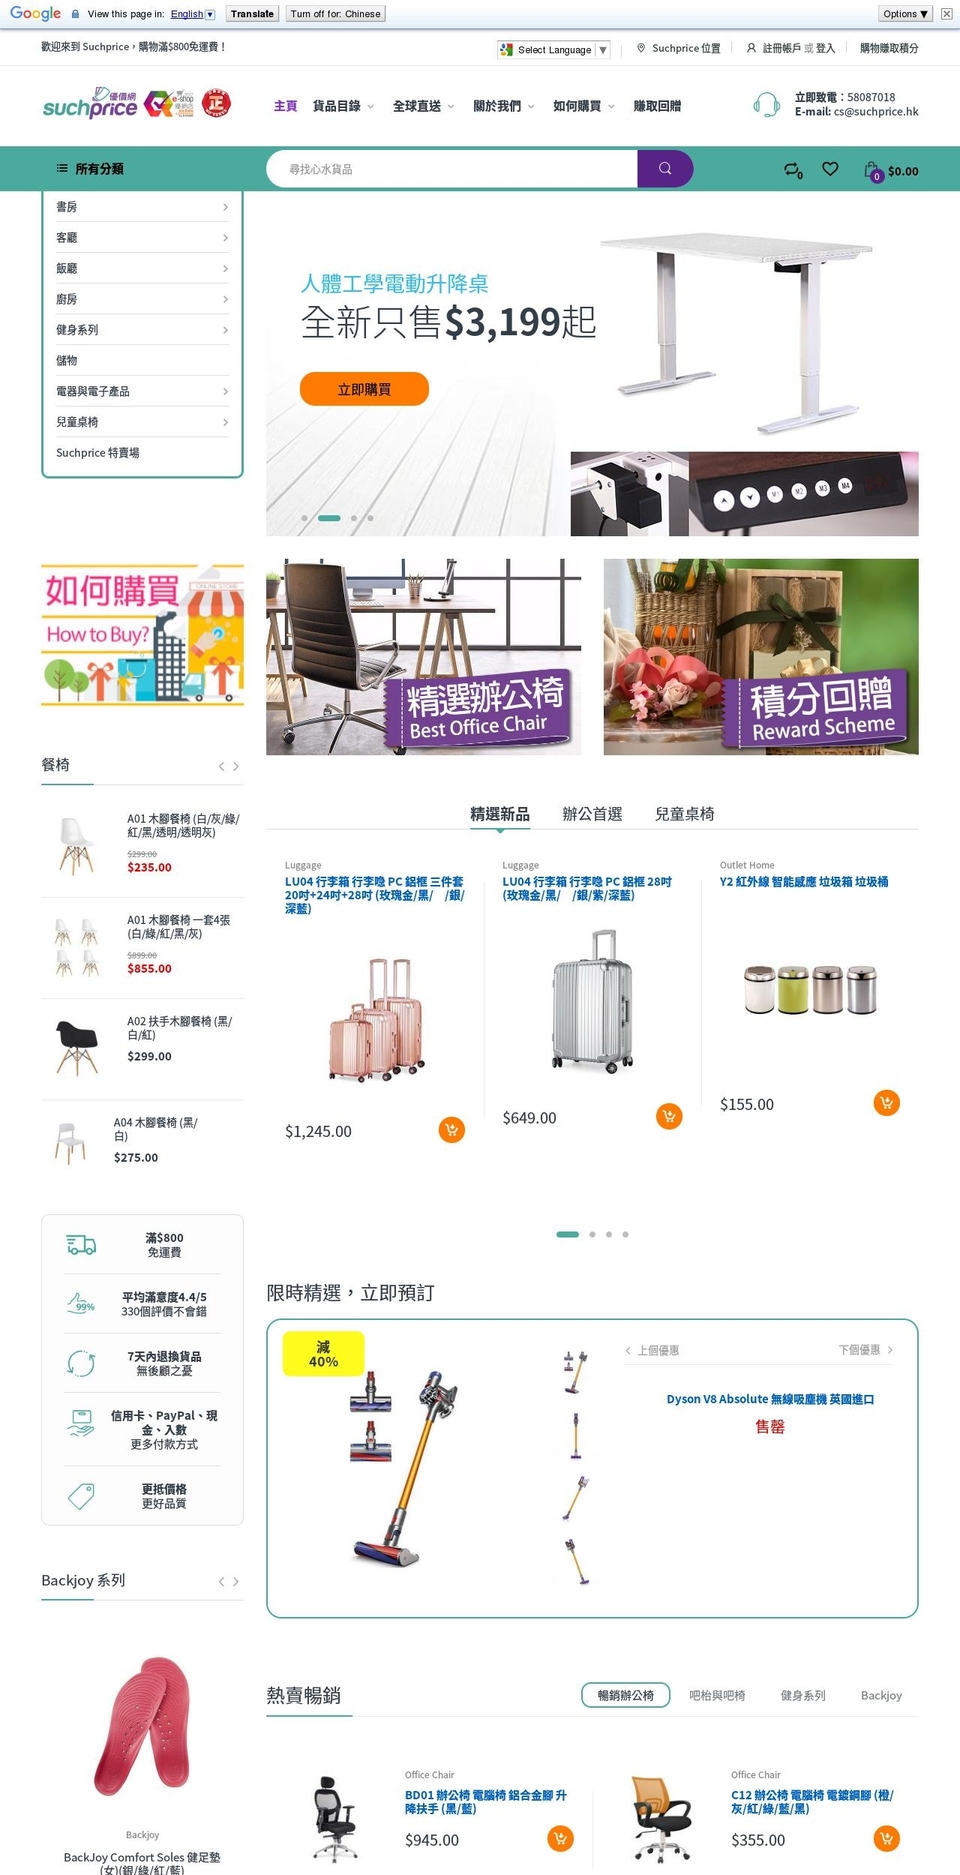 suchprice.hk shopify website screenshot